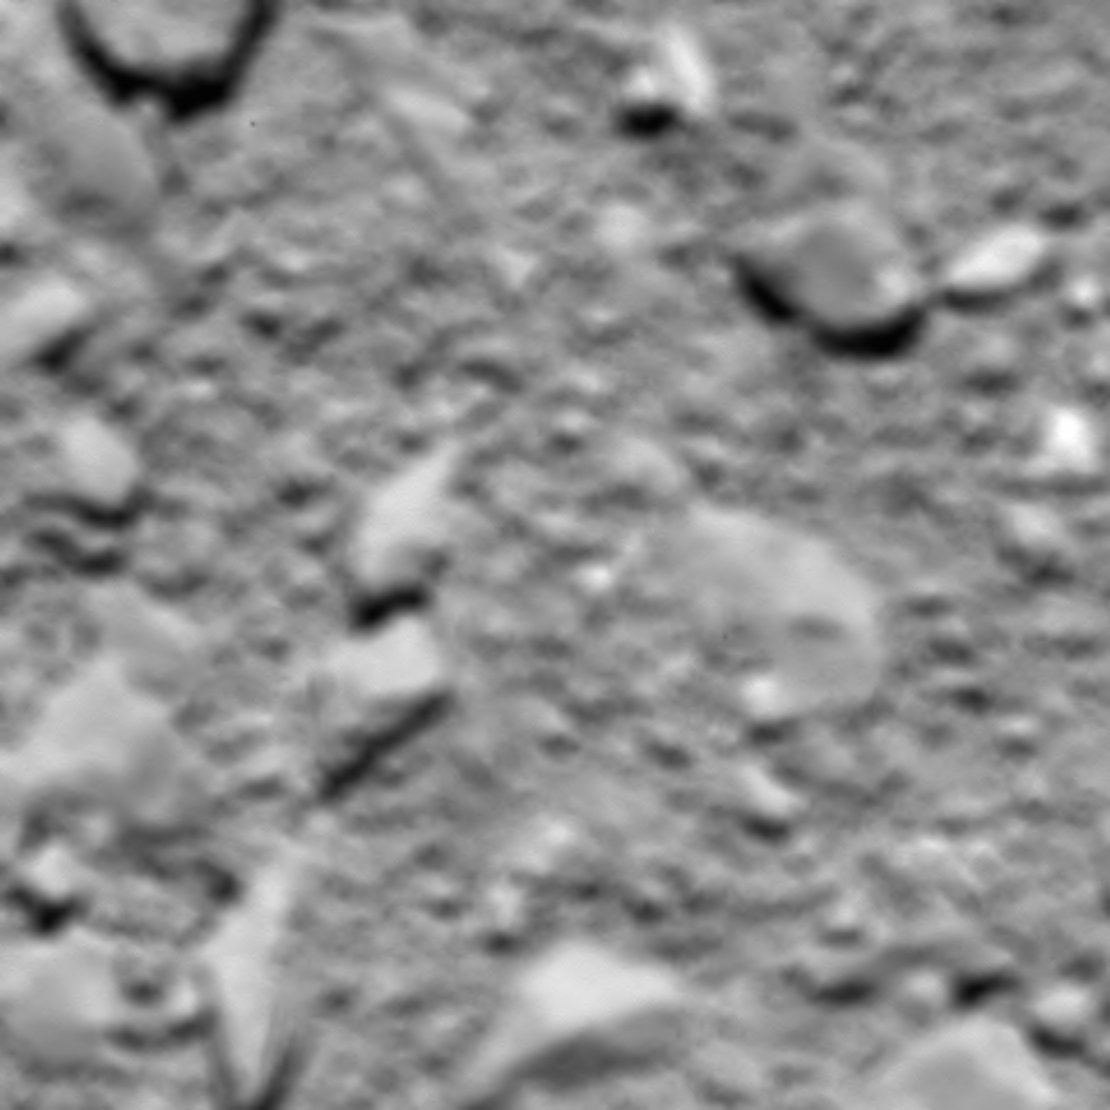 Last Photo From Rosetta